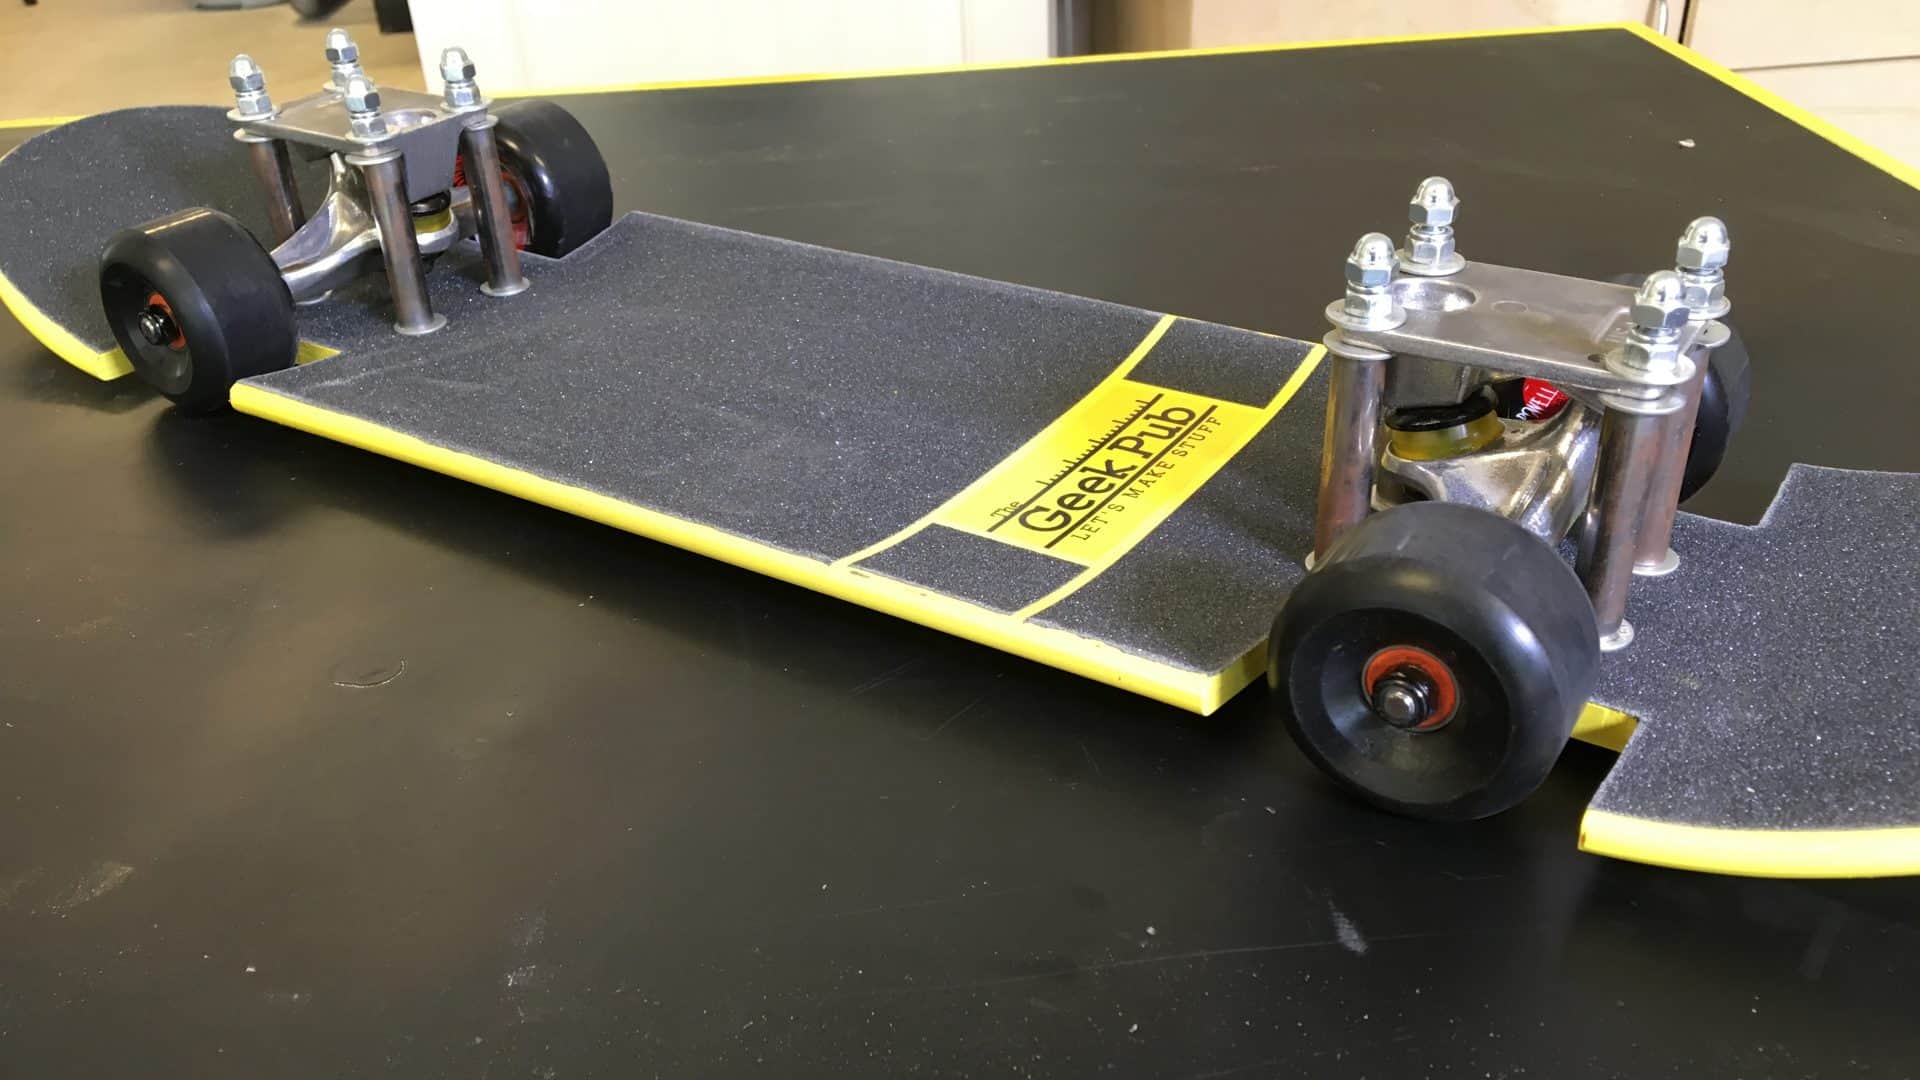 slammed lowrider skateboard build 0001